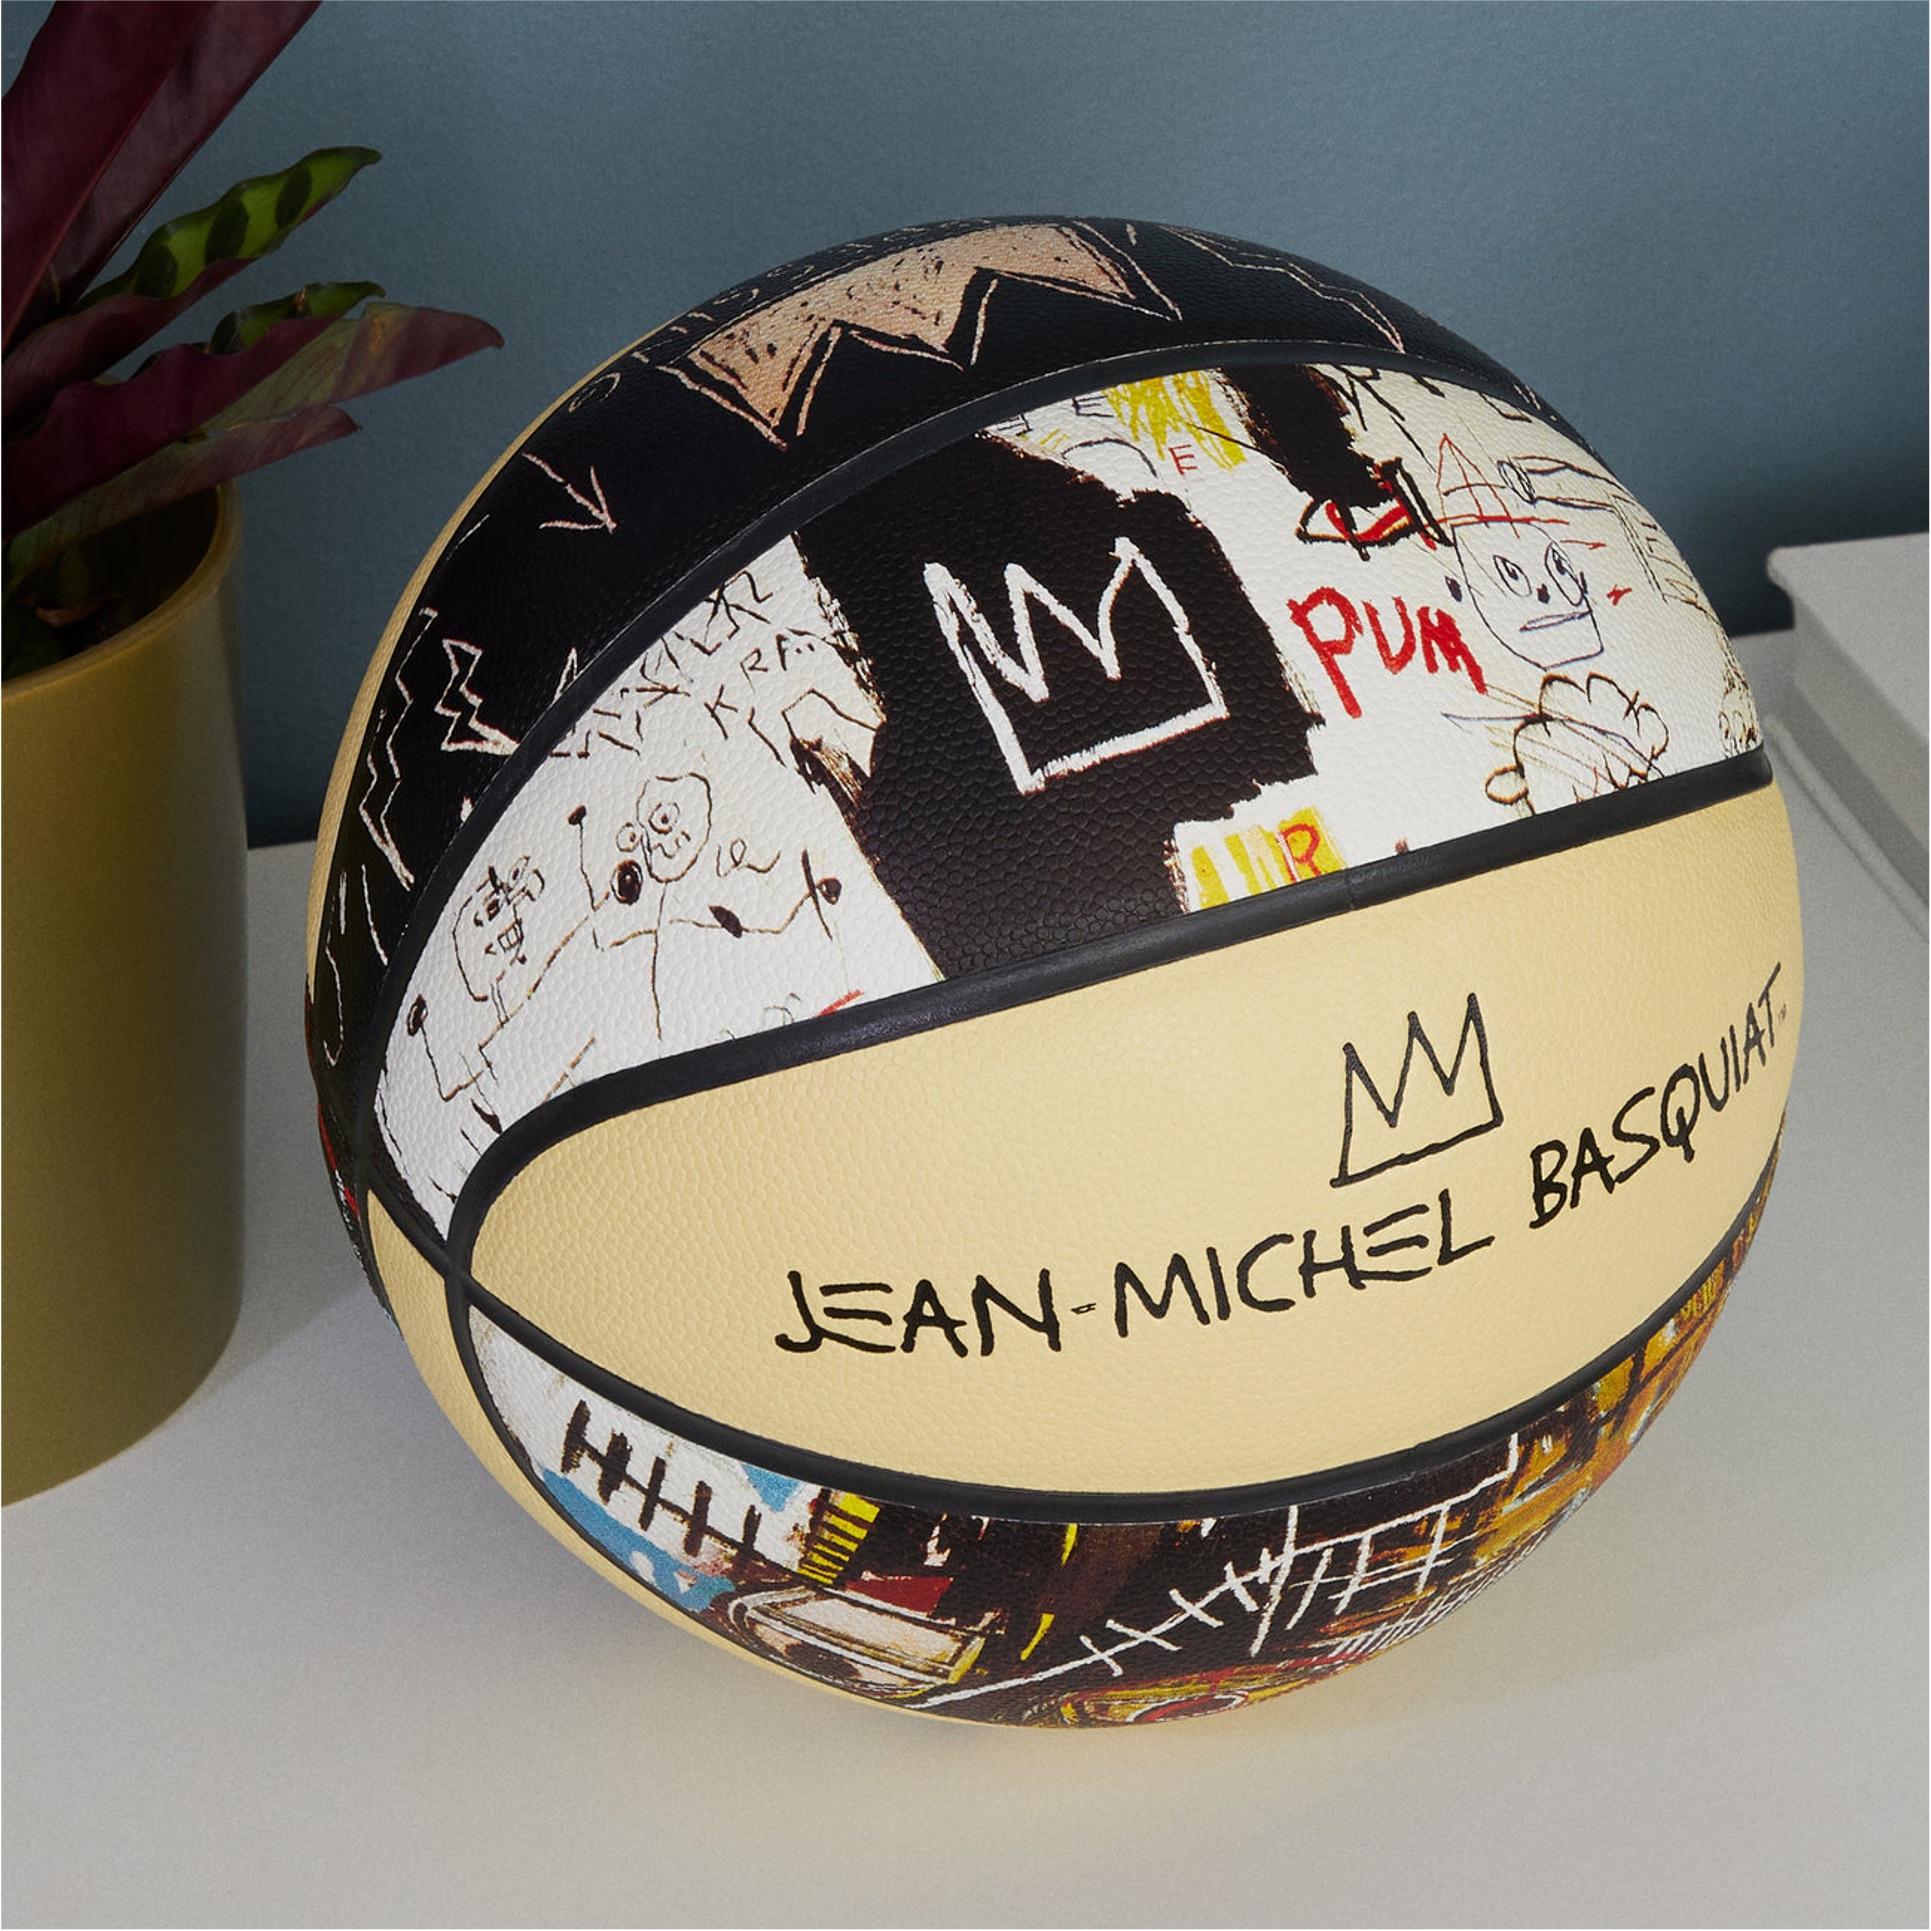 jean-michel basquiat lifeblood basketball